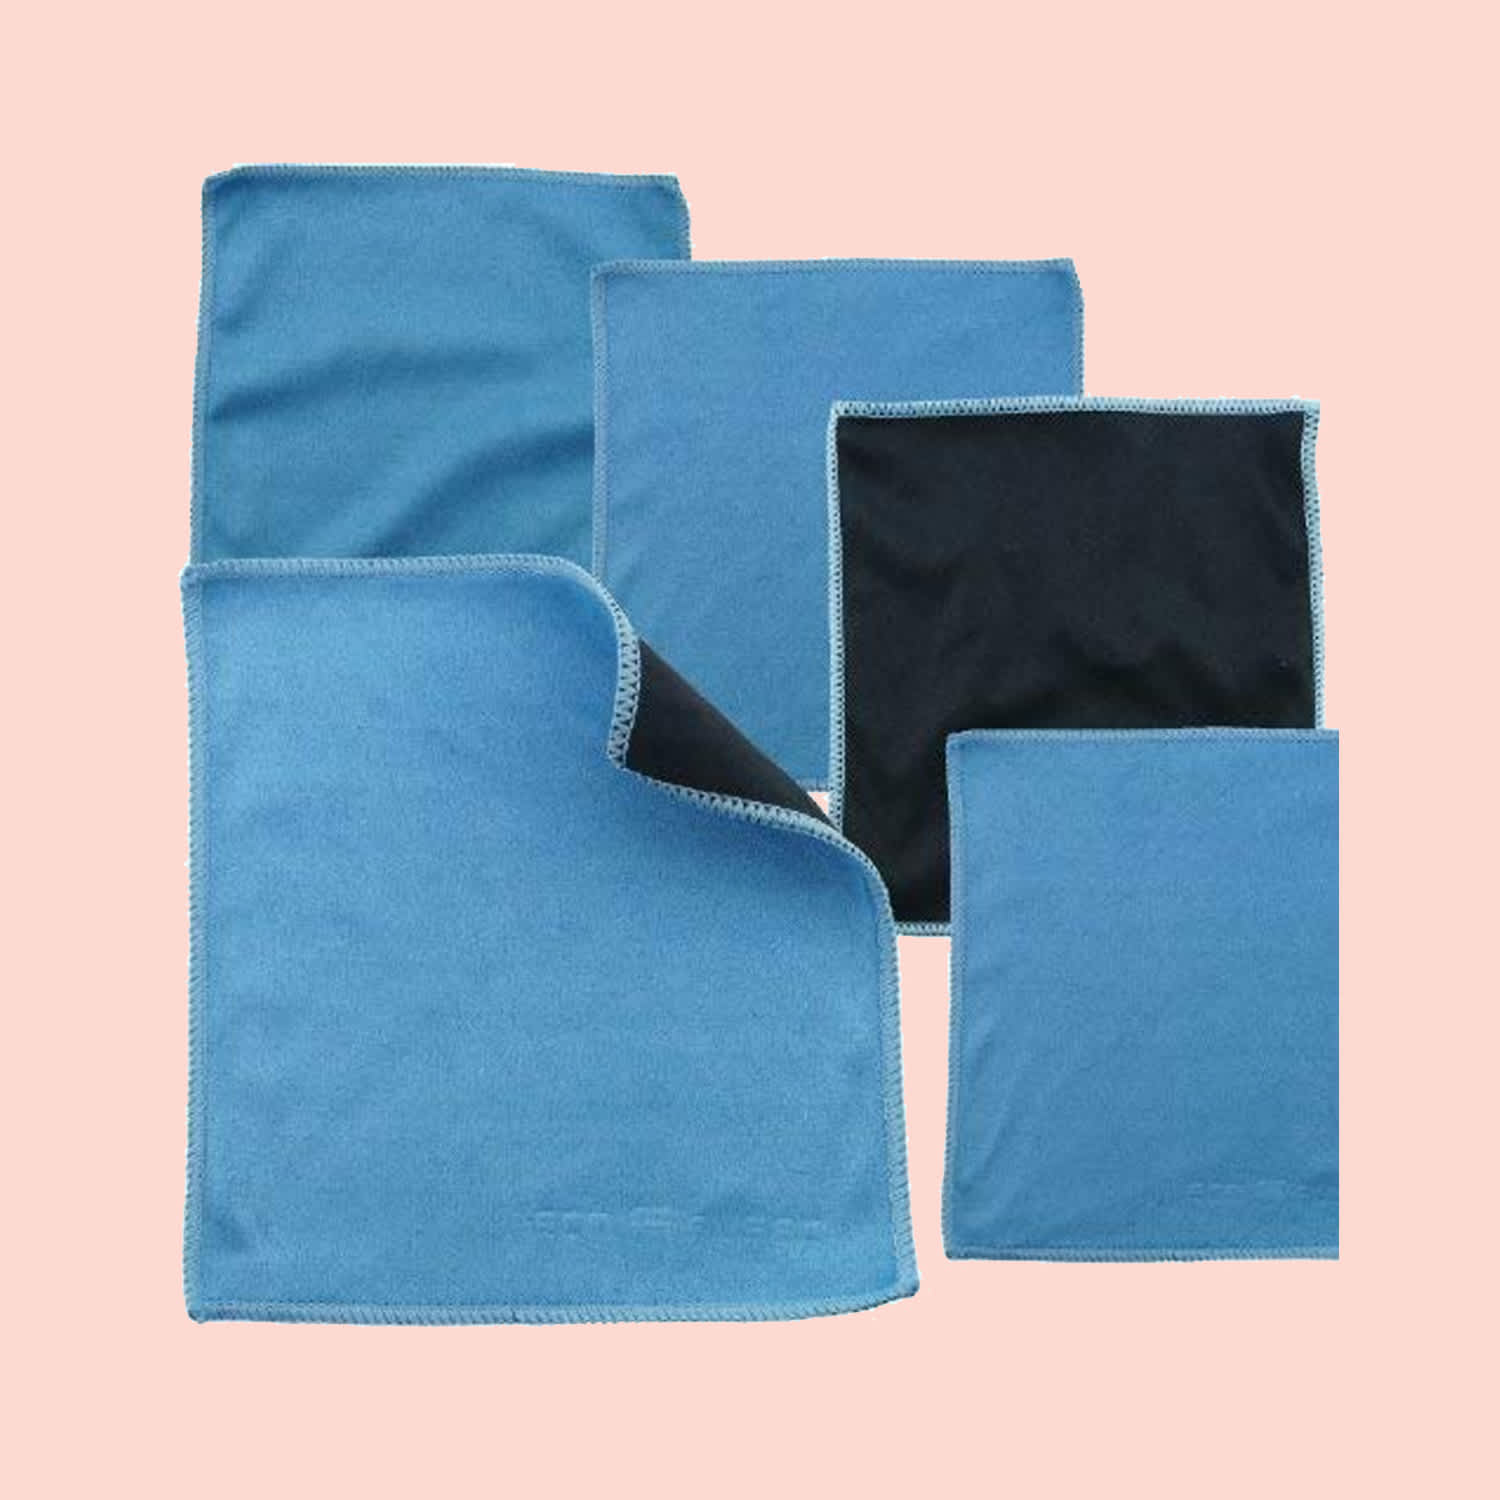 Something Blue Not Paper Towel